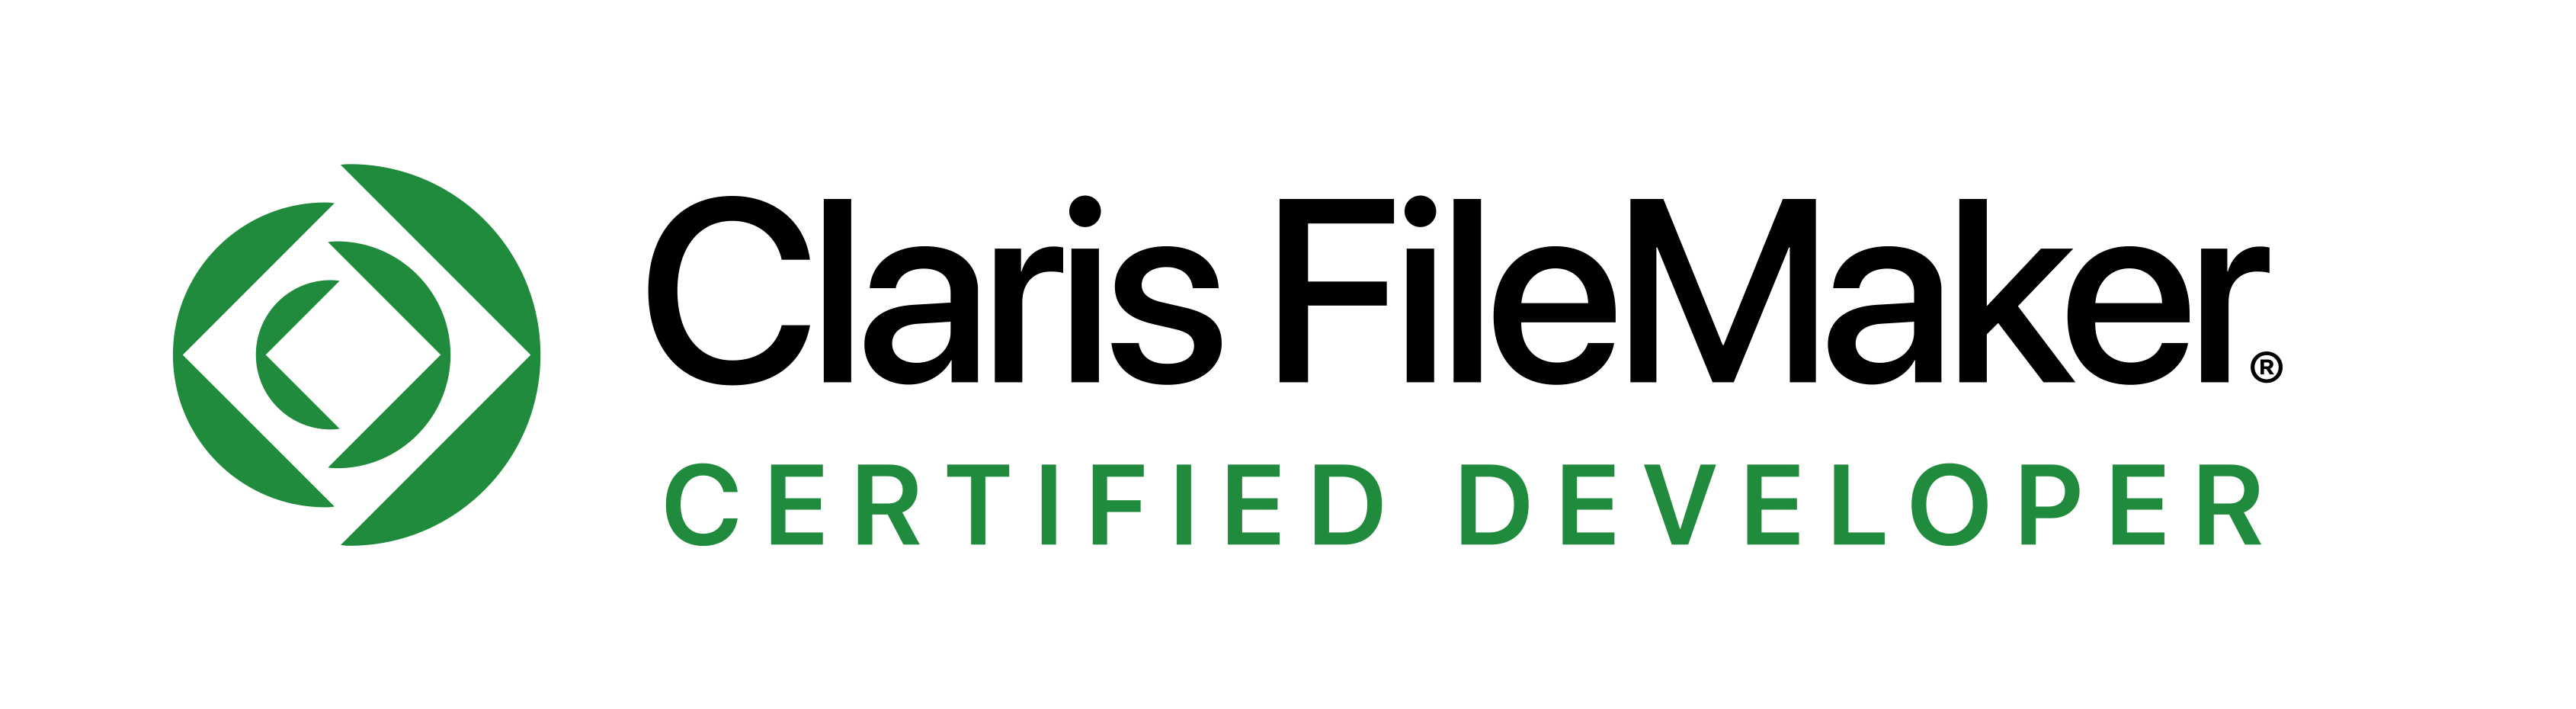 FileMaker 19 certified developer